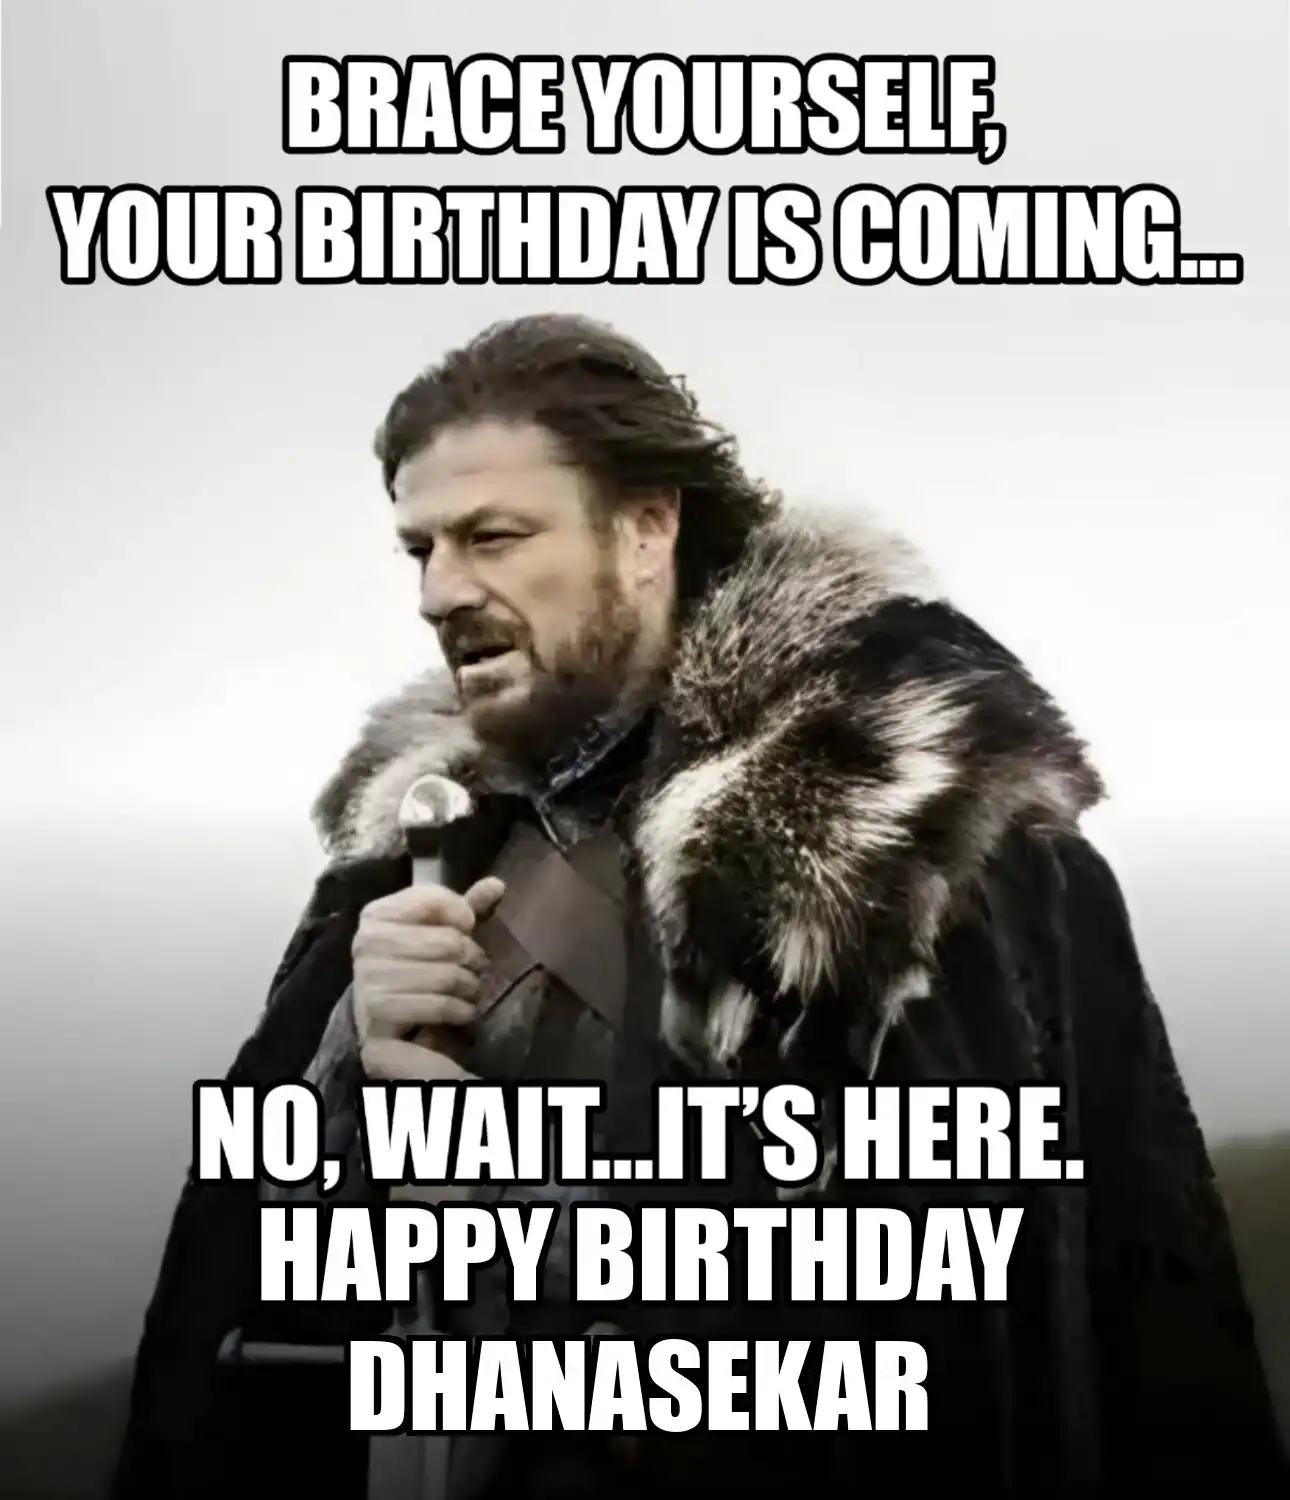 Happy Birthday Dhanasekar Brace Yourself Your Birthday Is Coming Meme